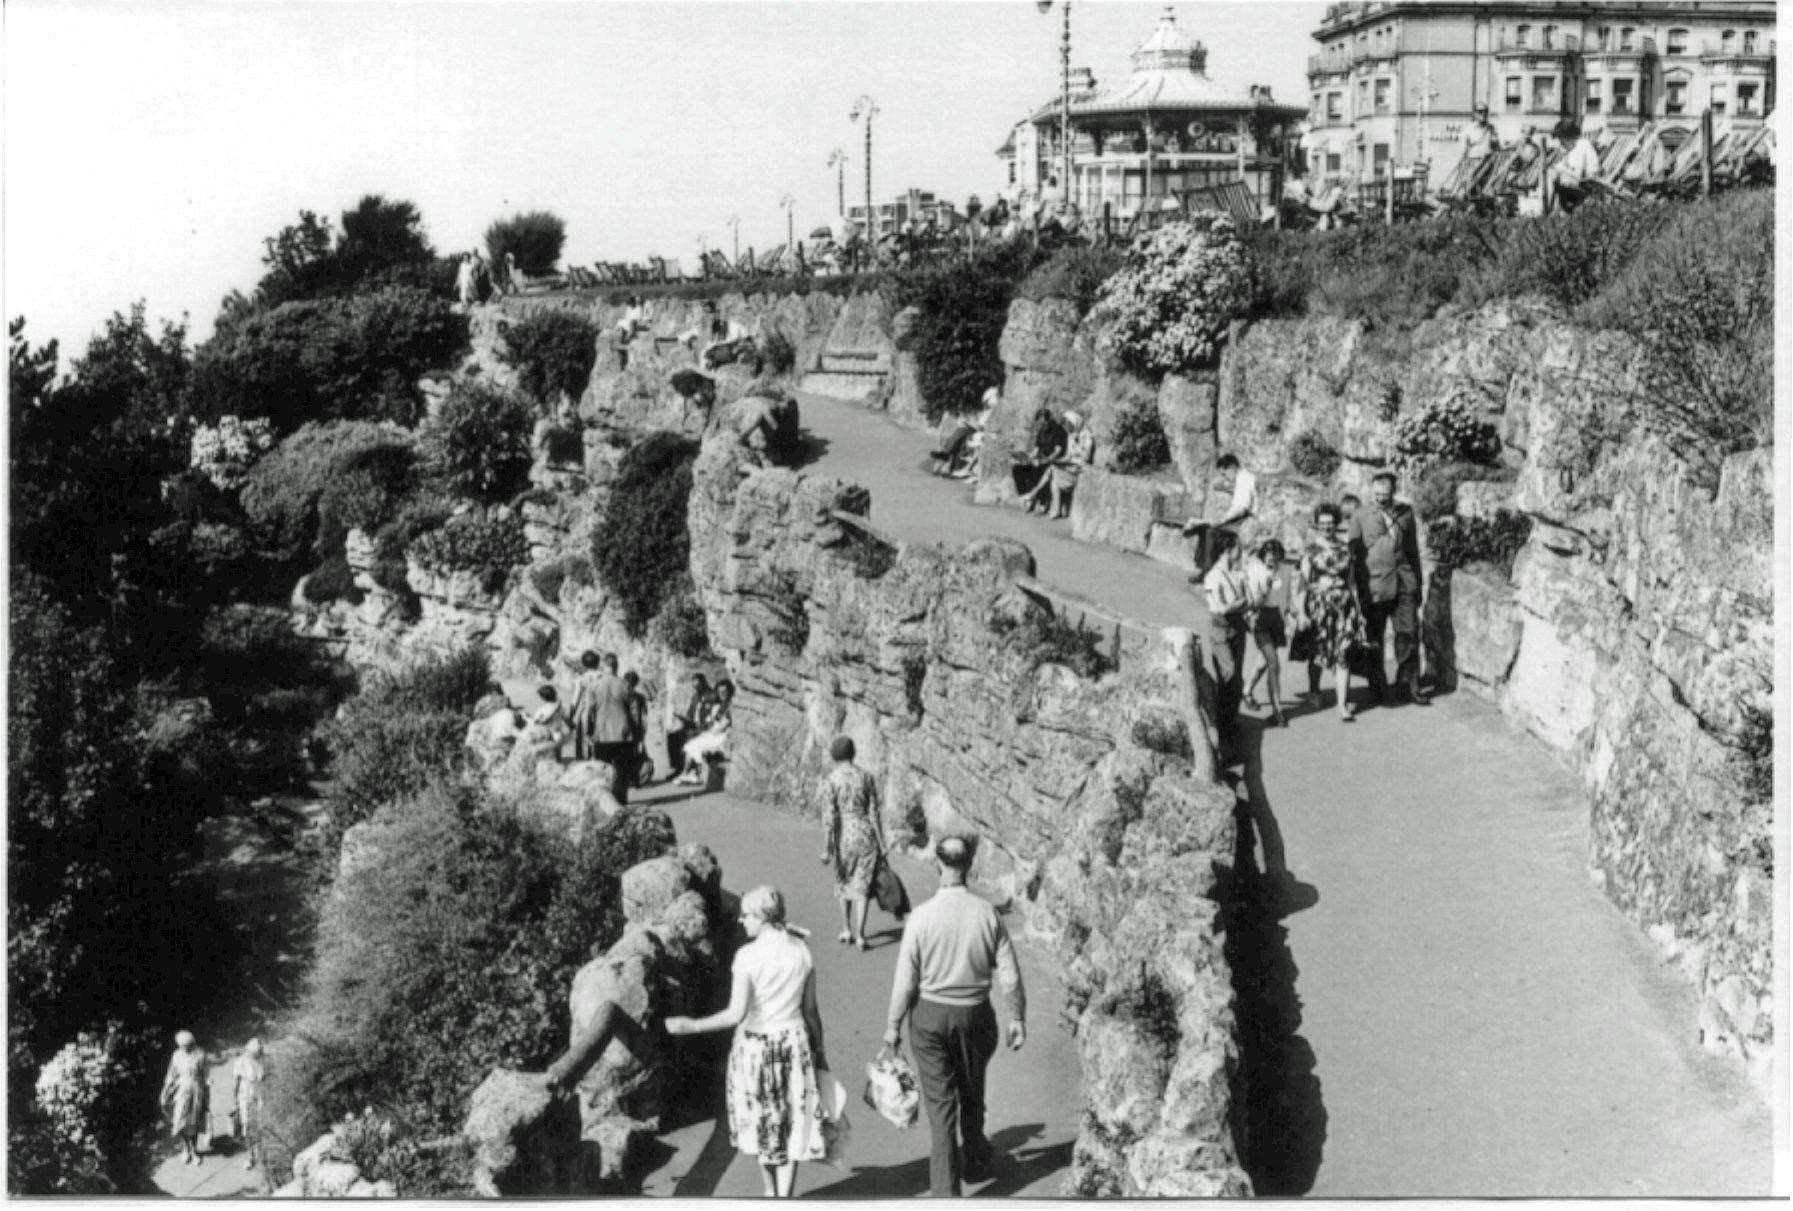 Folkestone in the 1950s was a popular tourist destination